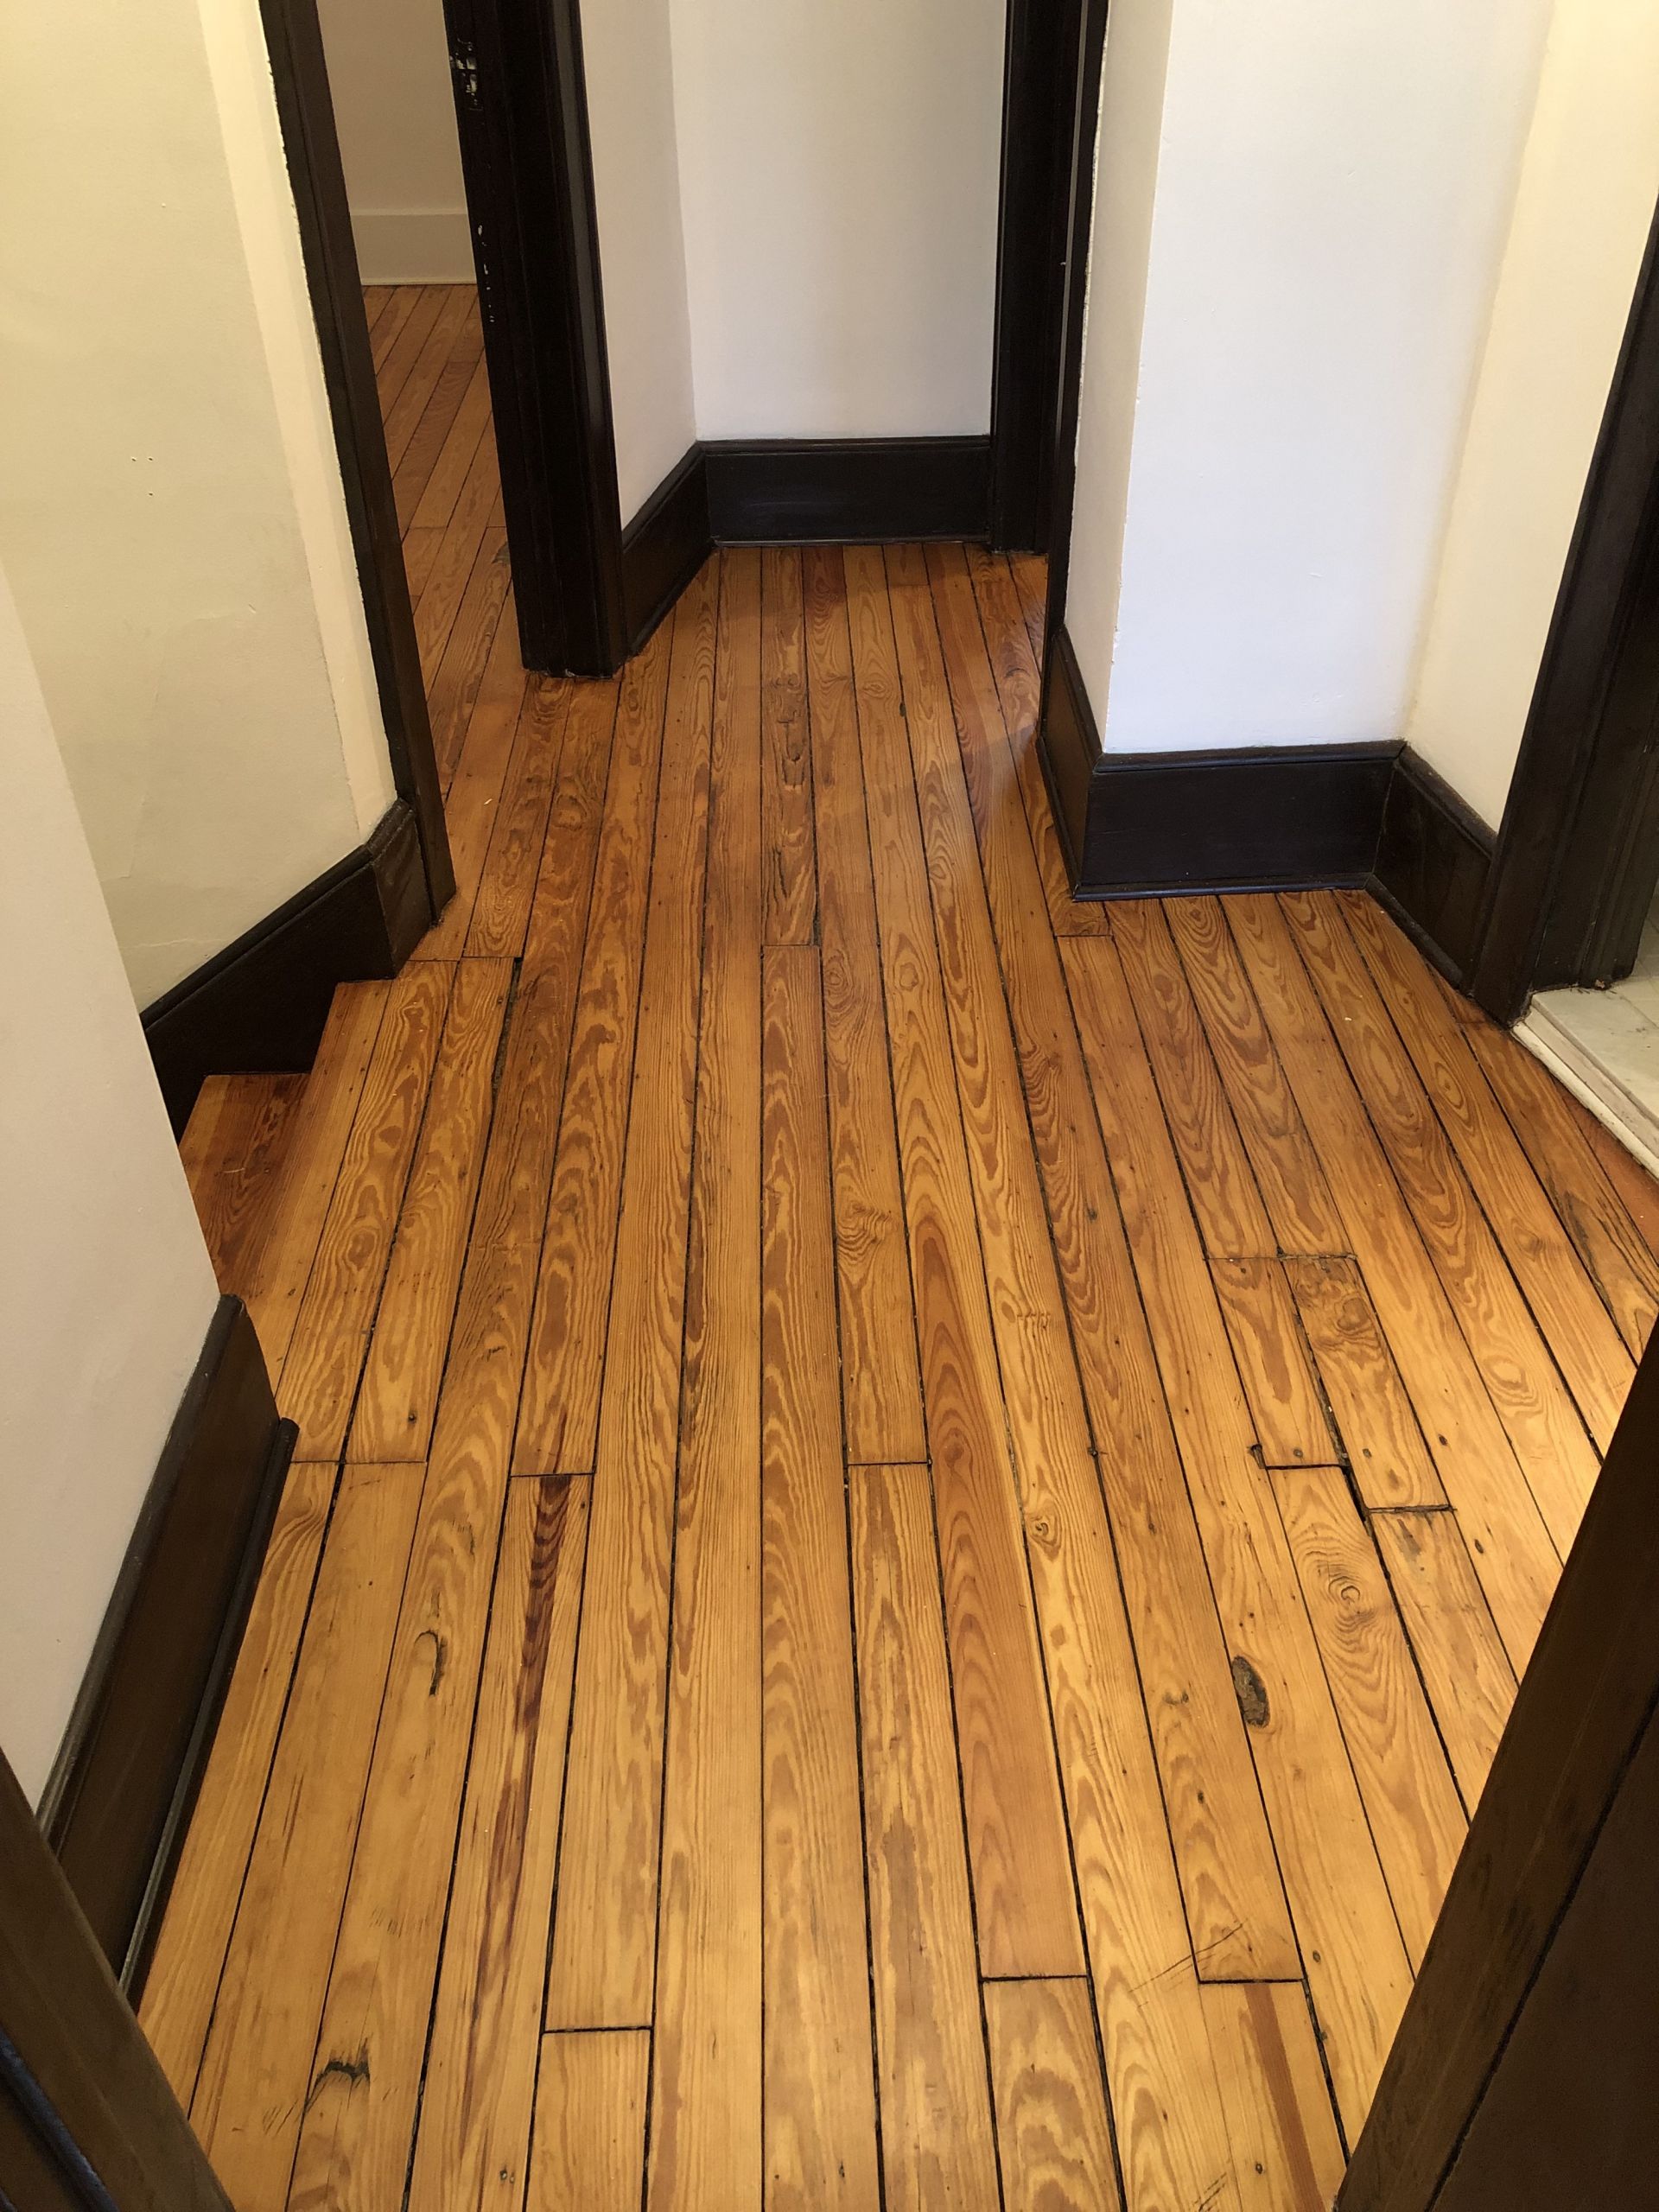 DIY Hardwood Floor Refinishing
 HOW TO REFINISH HARDWOOD FLOORS Step by Step Do It